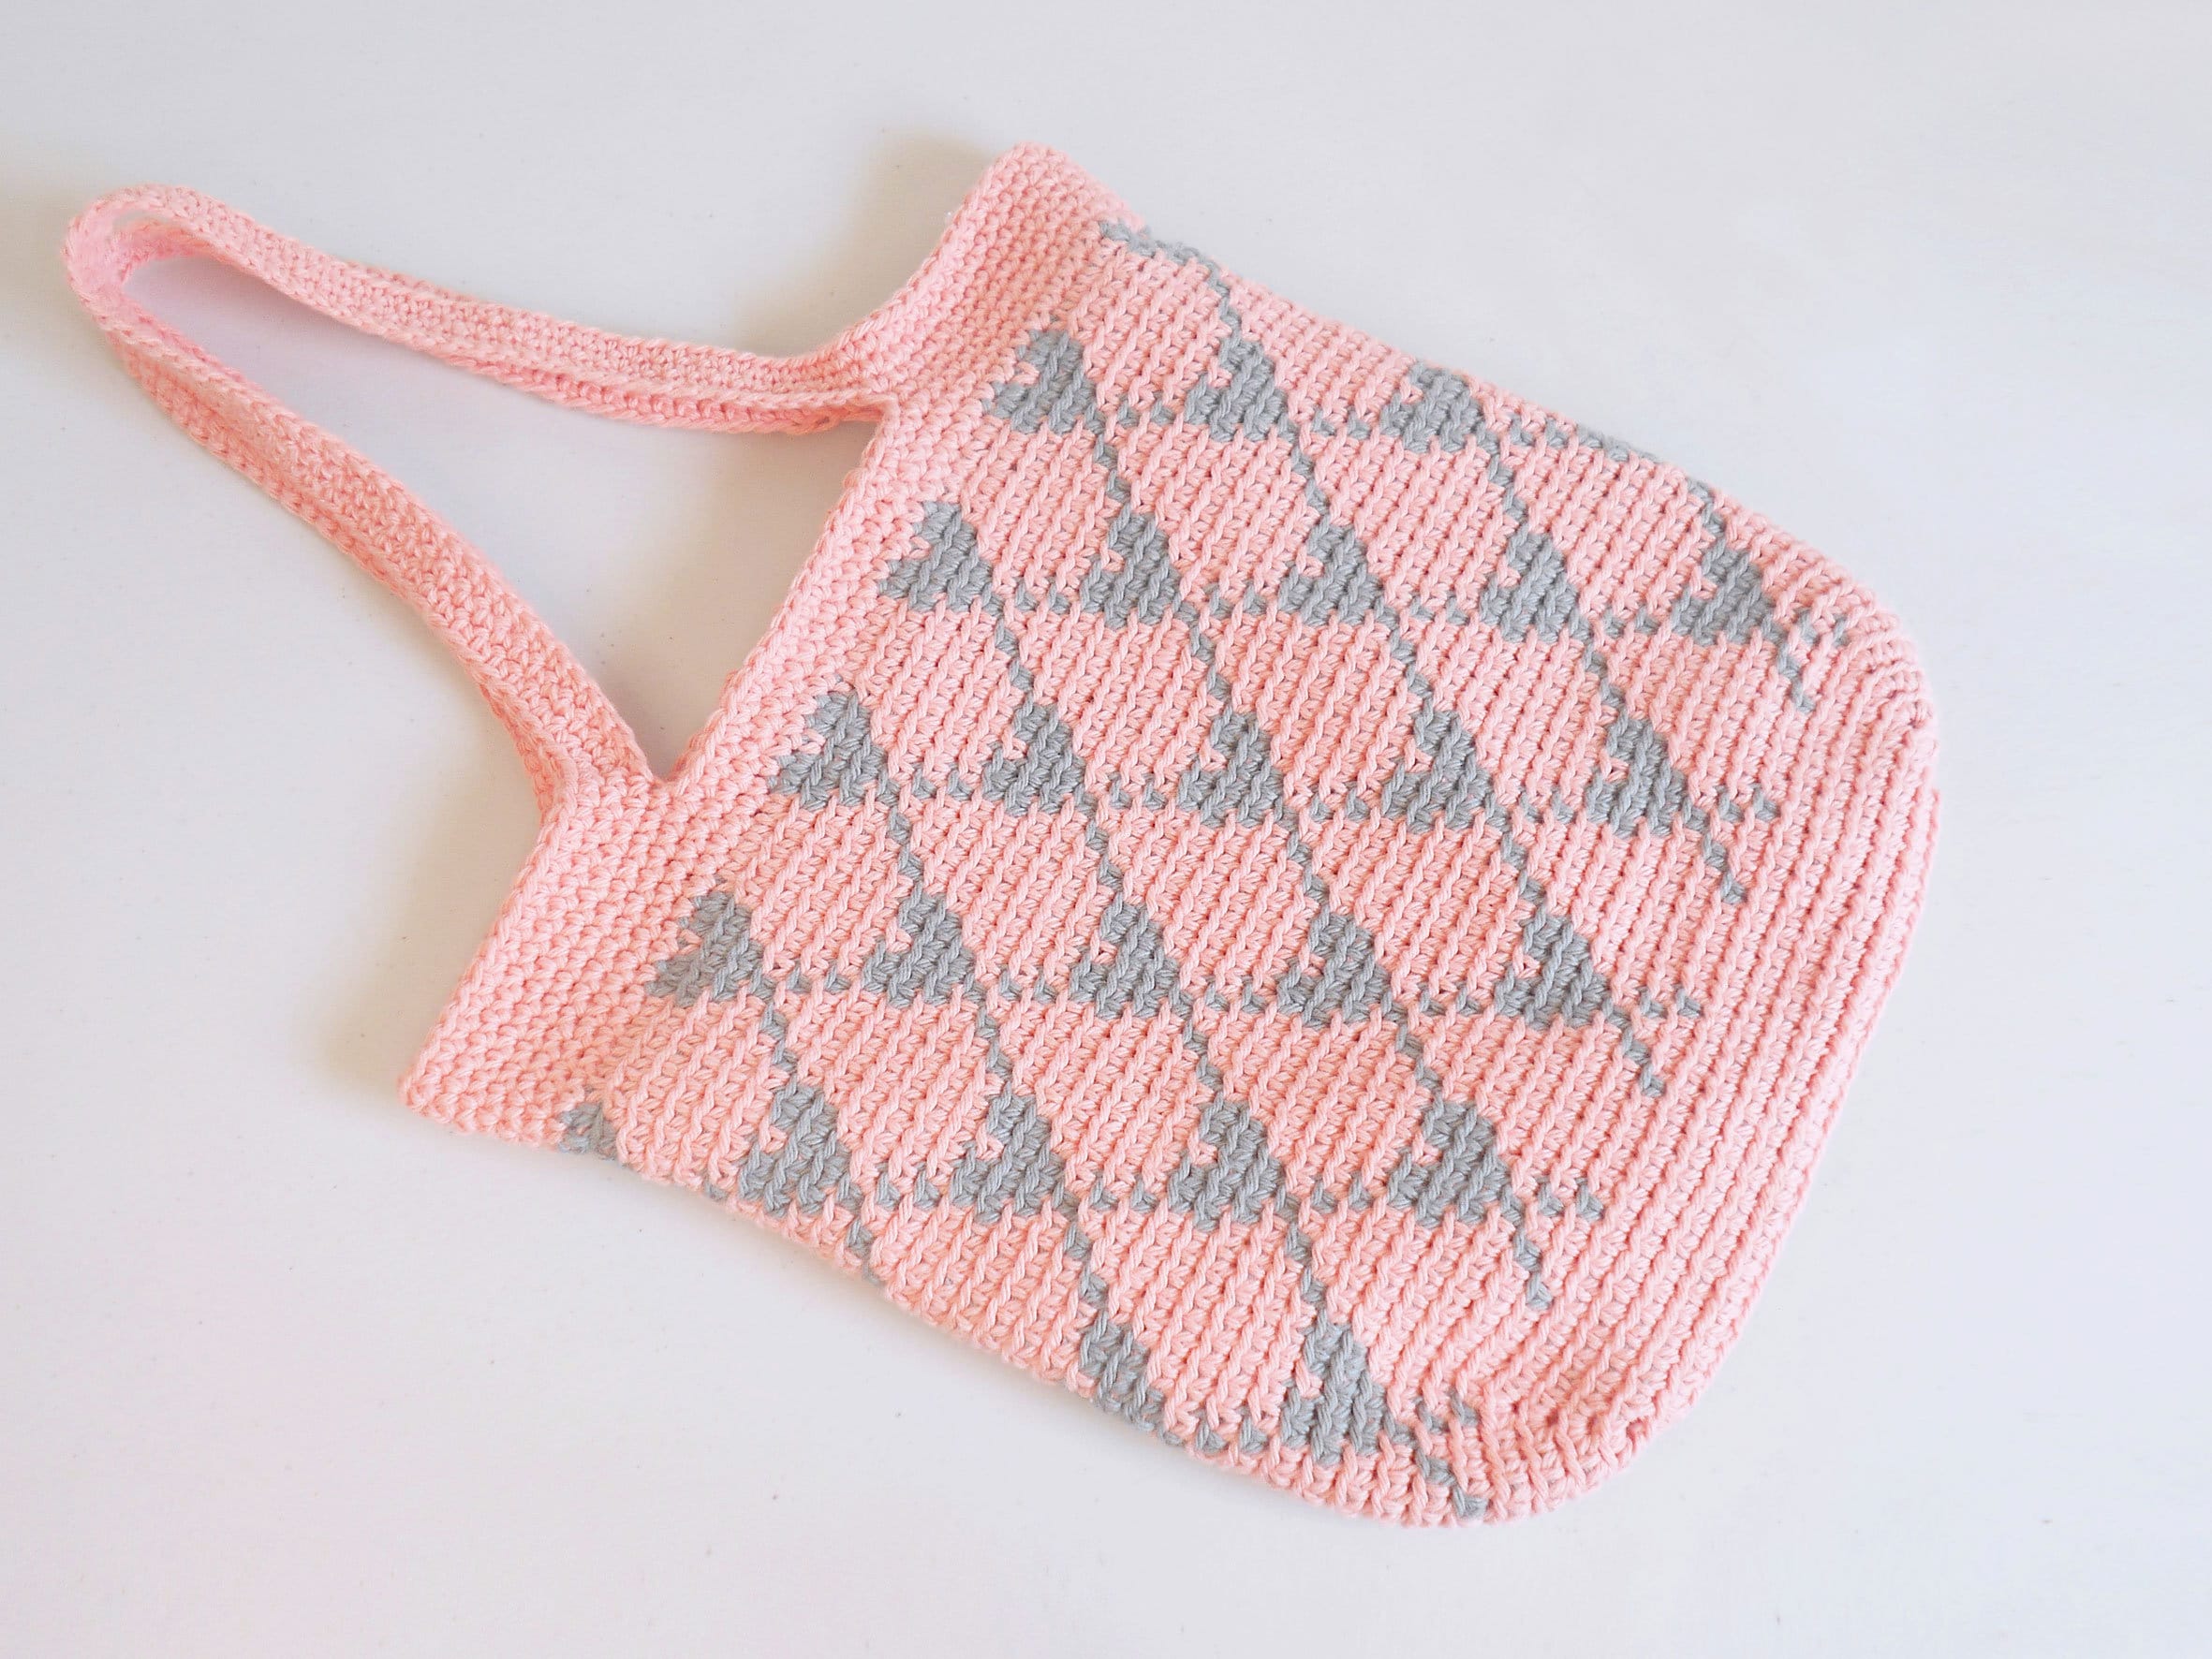 Crochet pattern for Cuore Tote, crochet bags, tapestry bags, diy bags,  tapestry crochet, crochet patterns, crochet tutorials